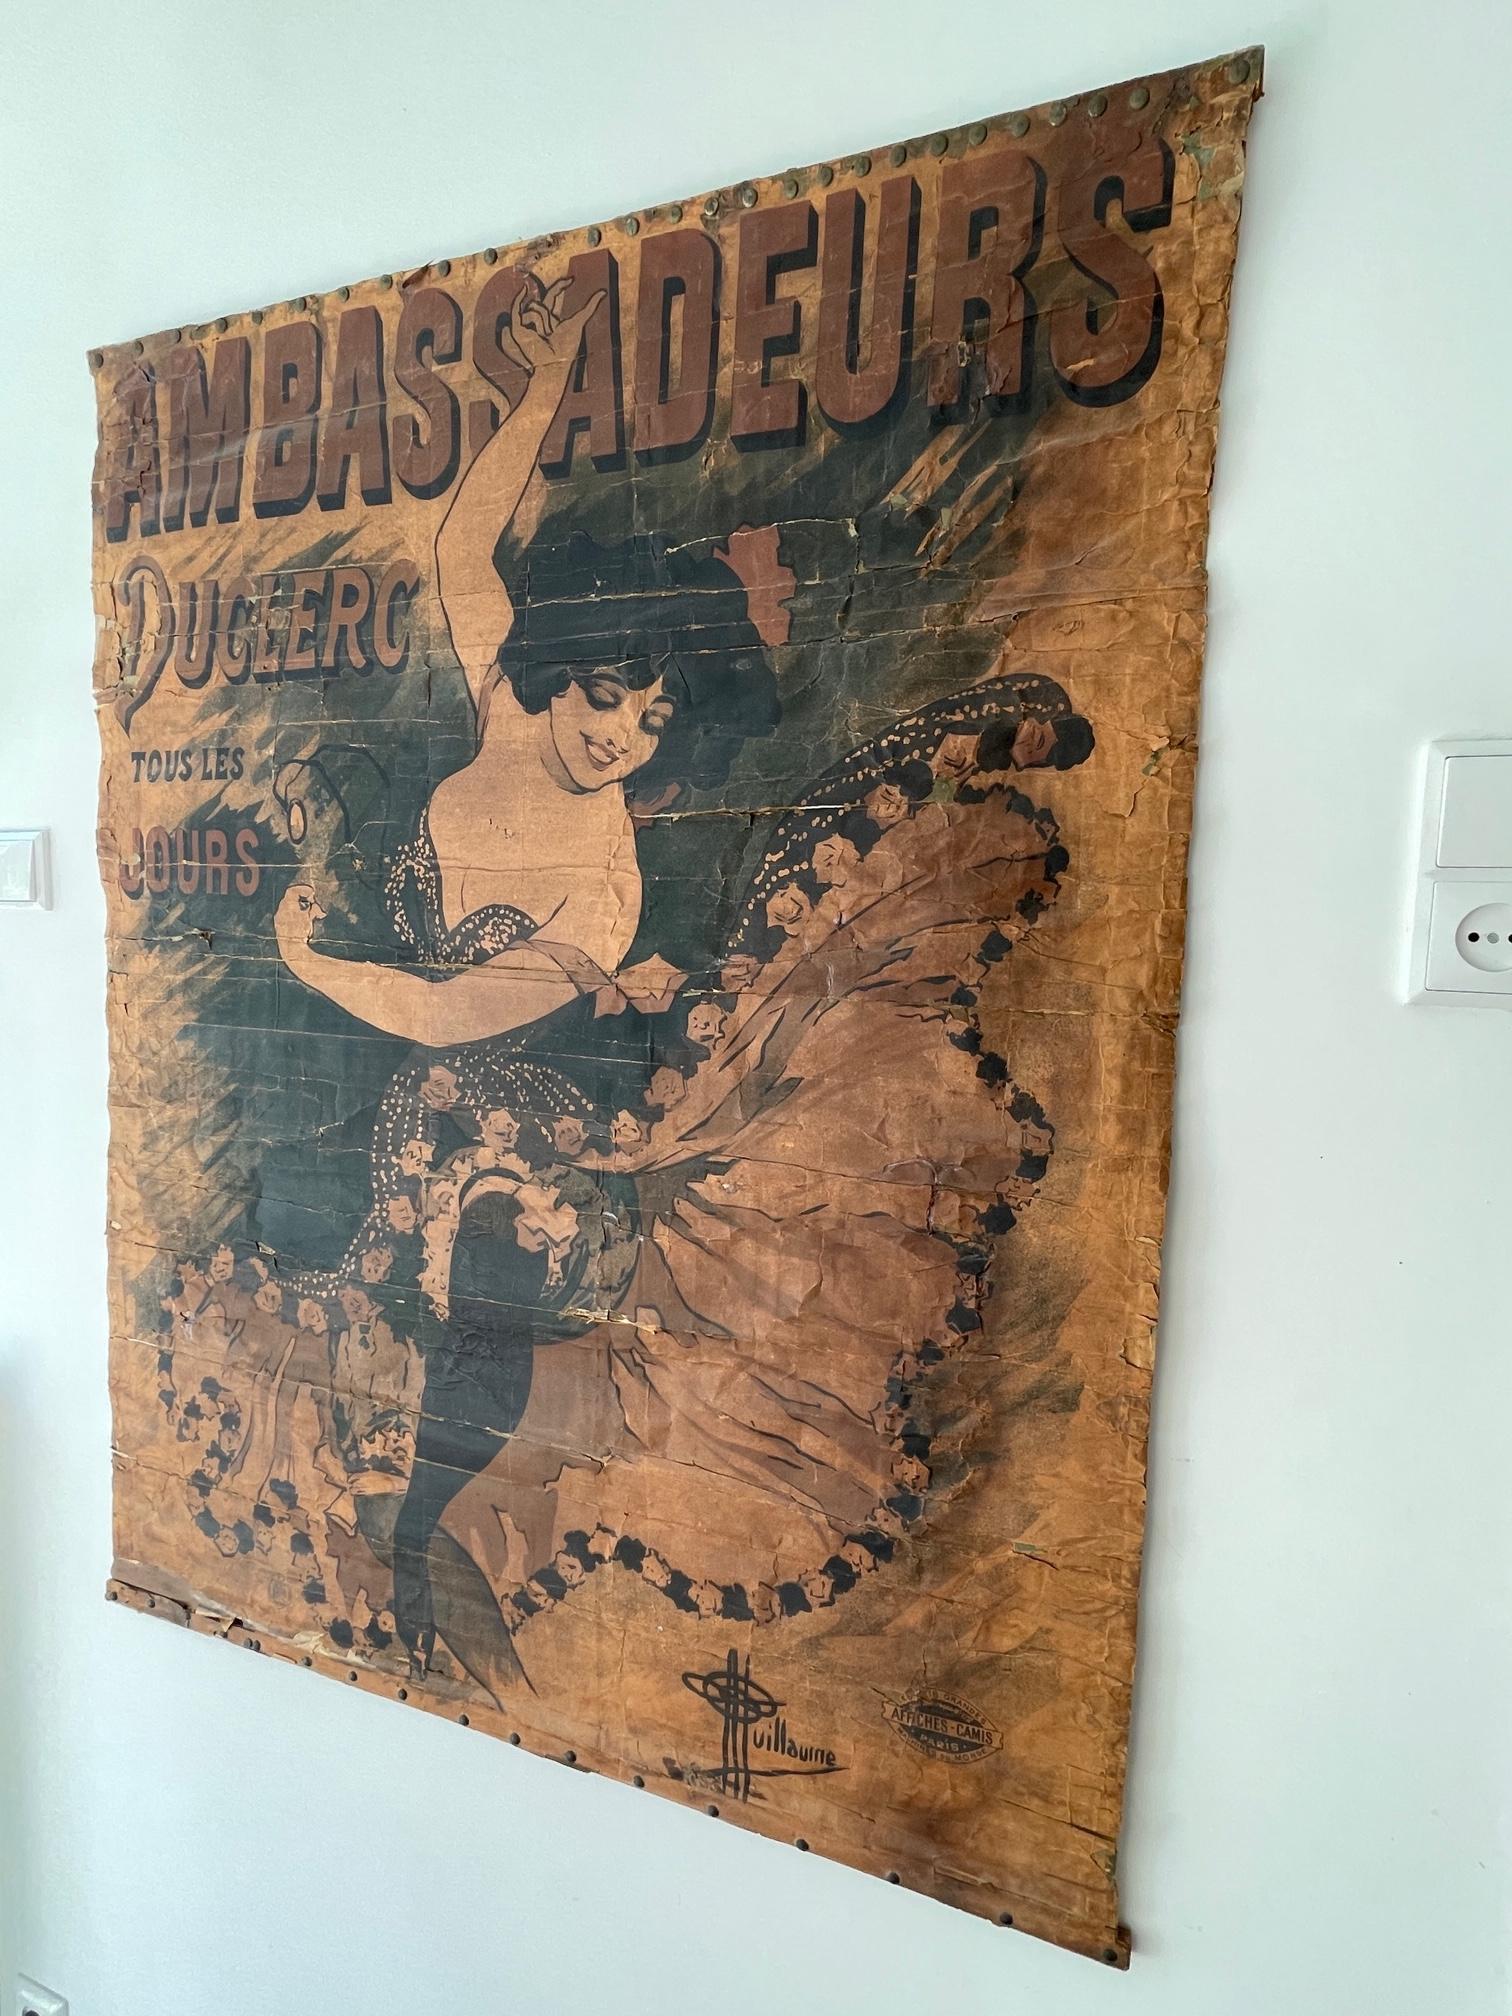 1894 Antike affiche / Poster Ambassadeurs Duclerc tous les jours - Guillaume im Angebot 3